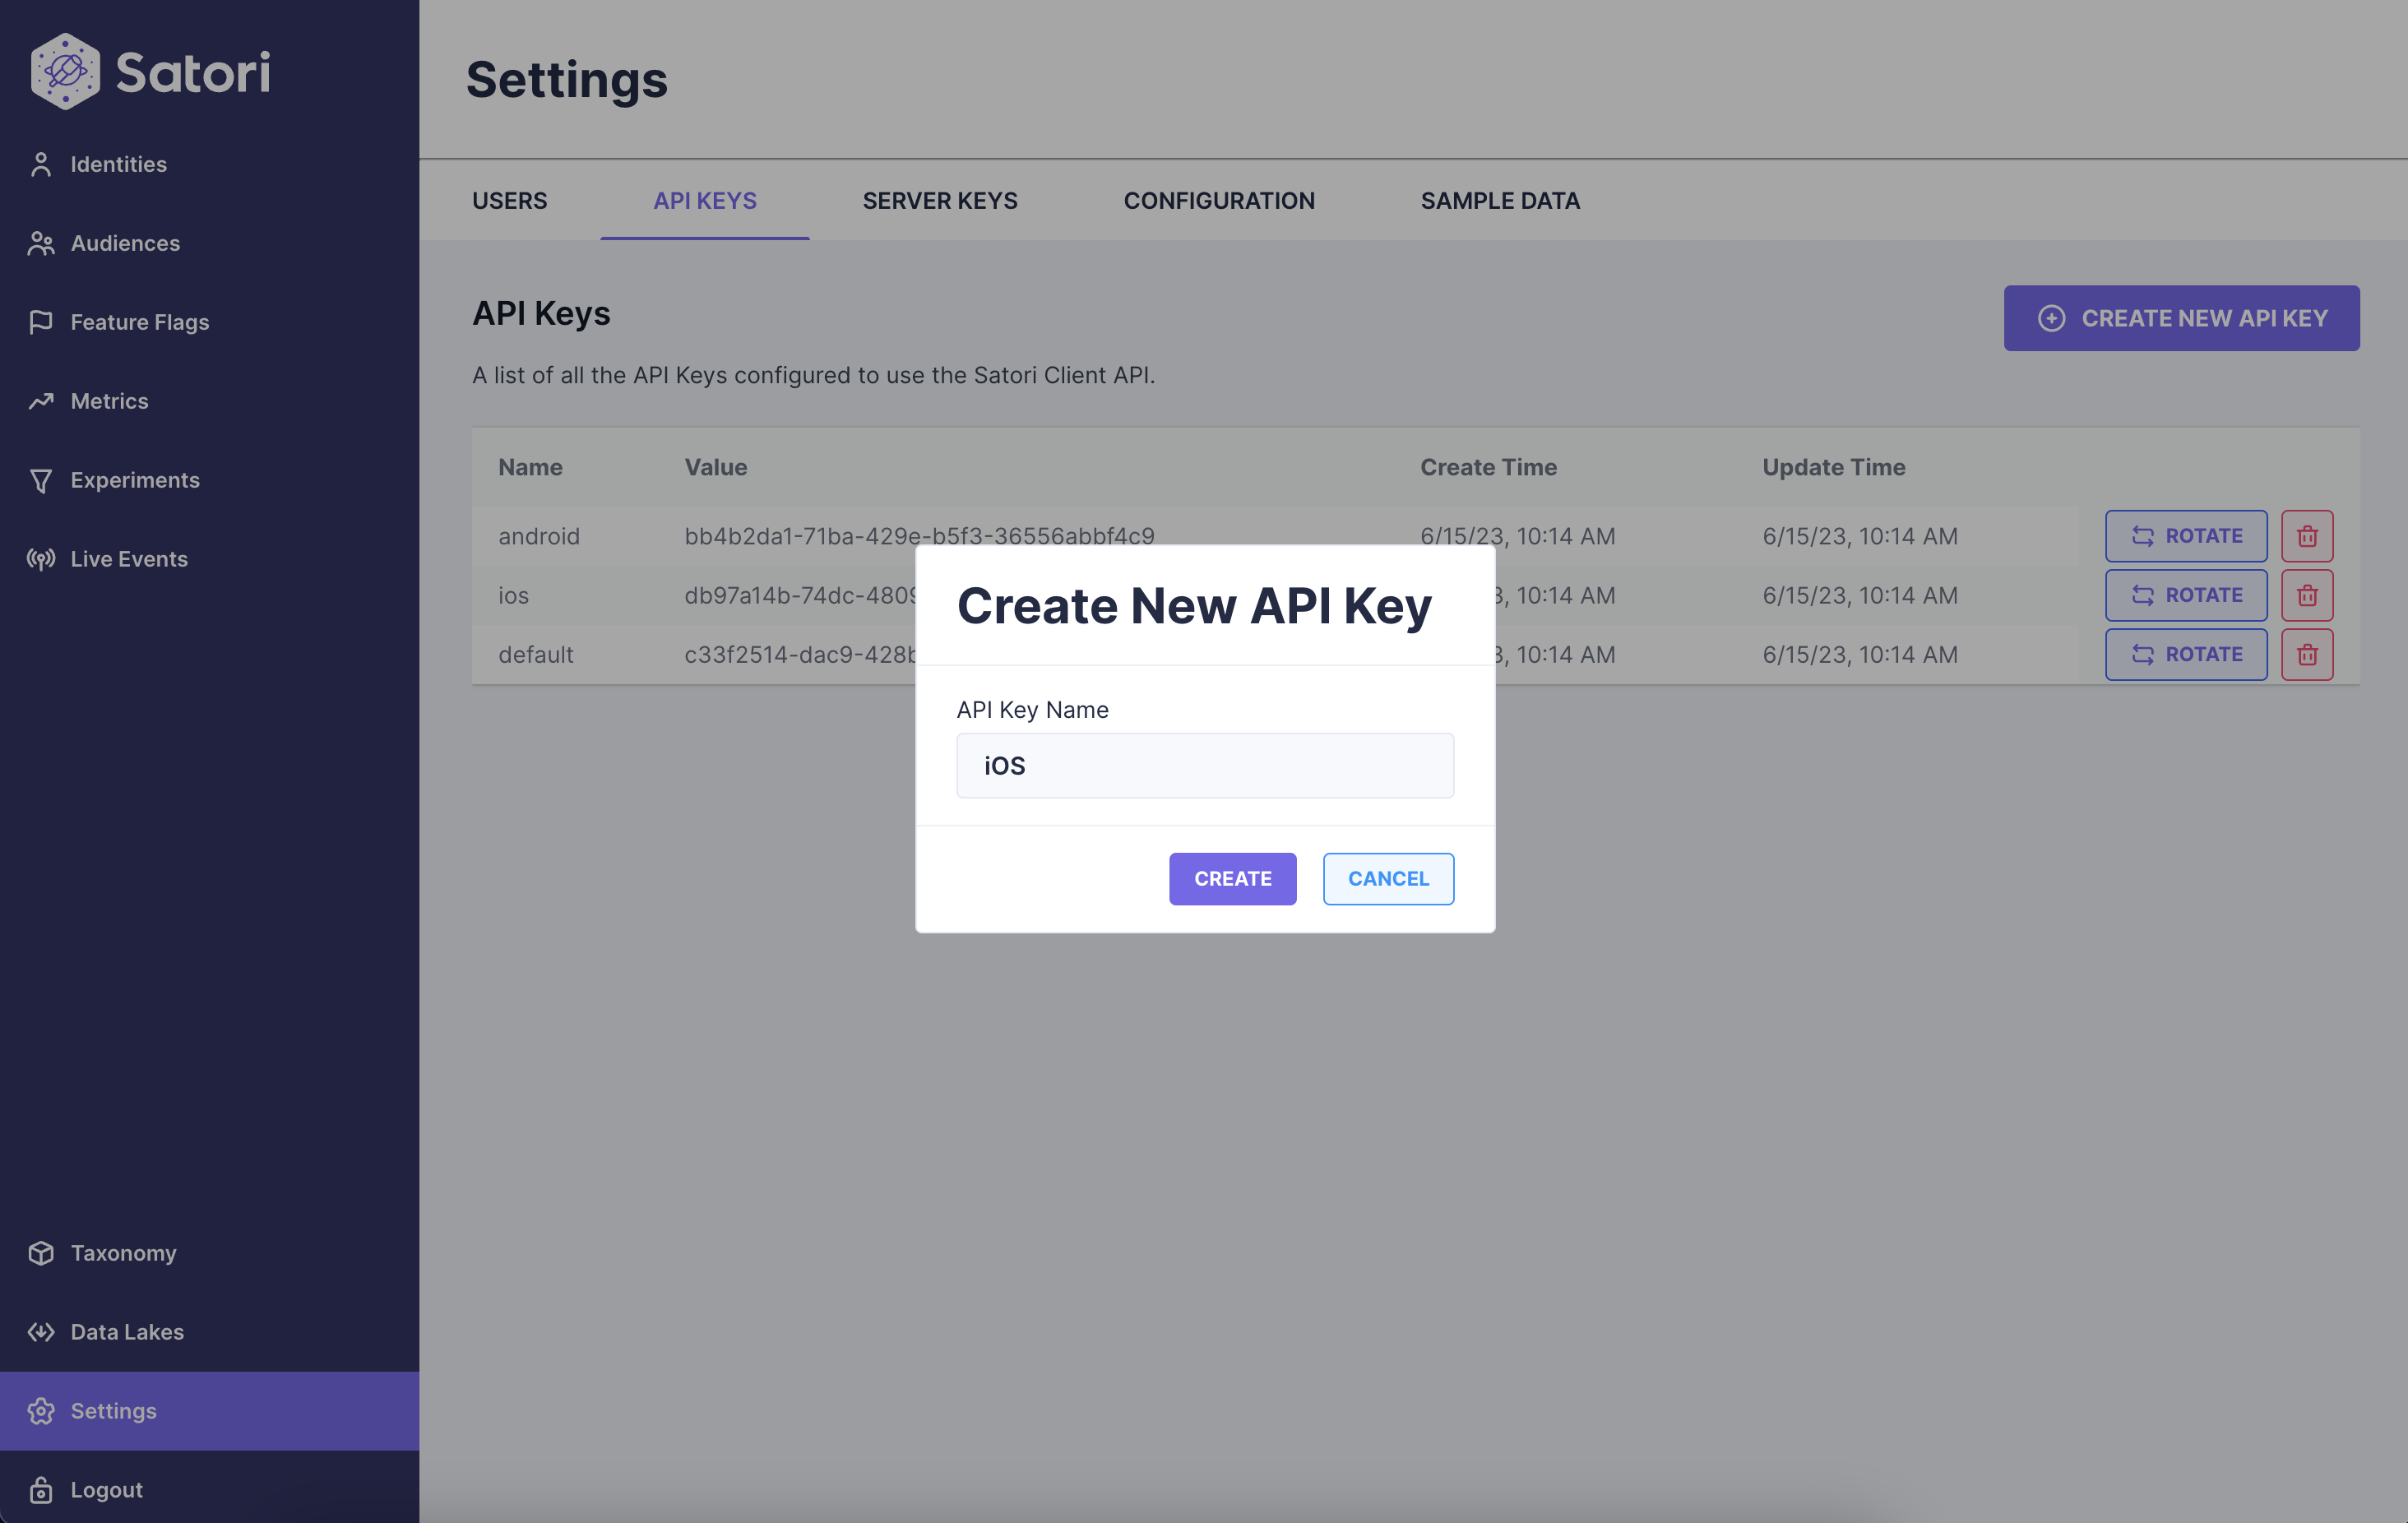 Create a new API key